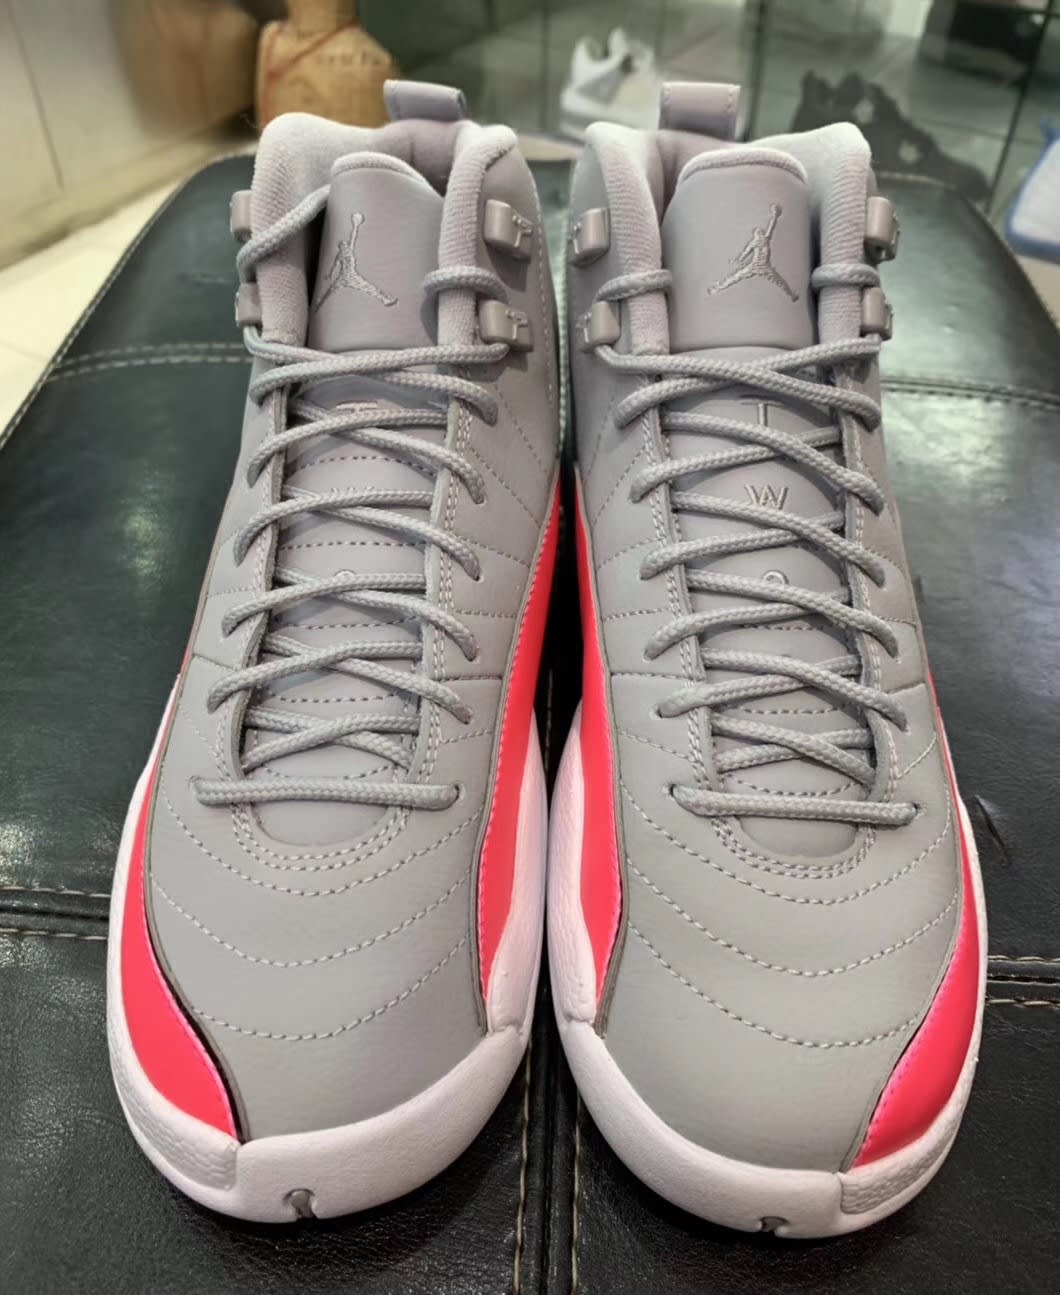 pink and grey jordan 12s